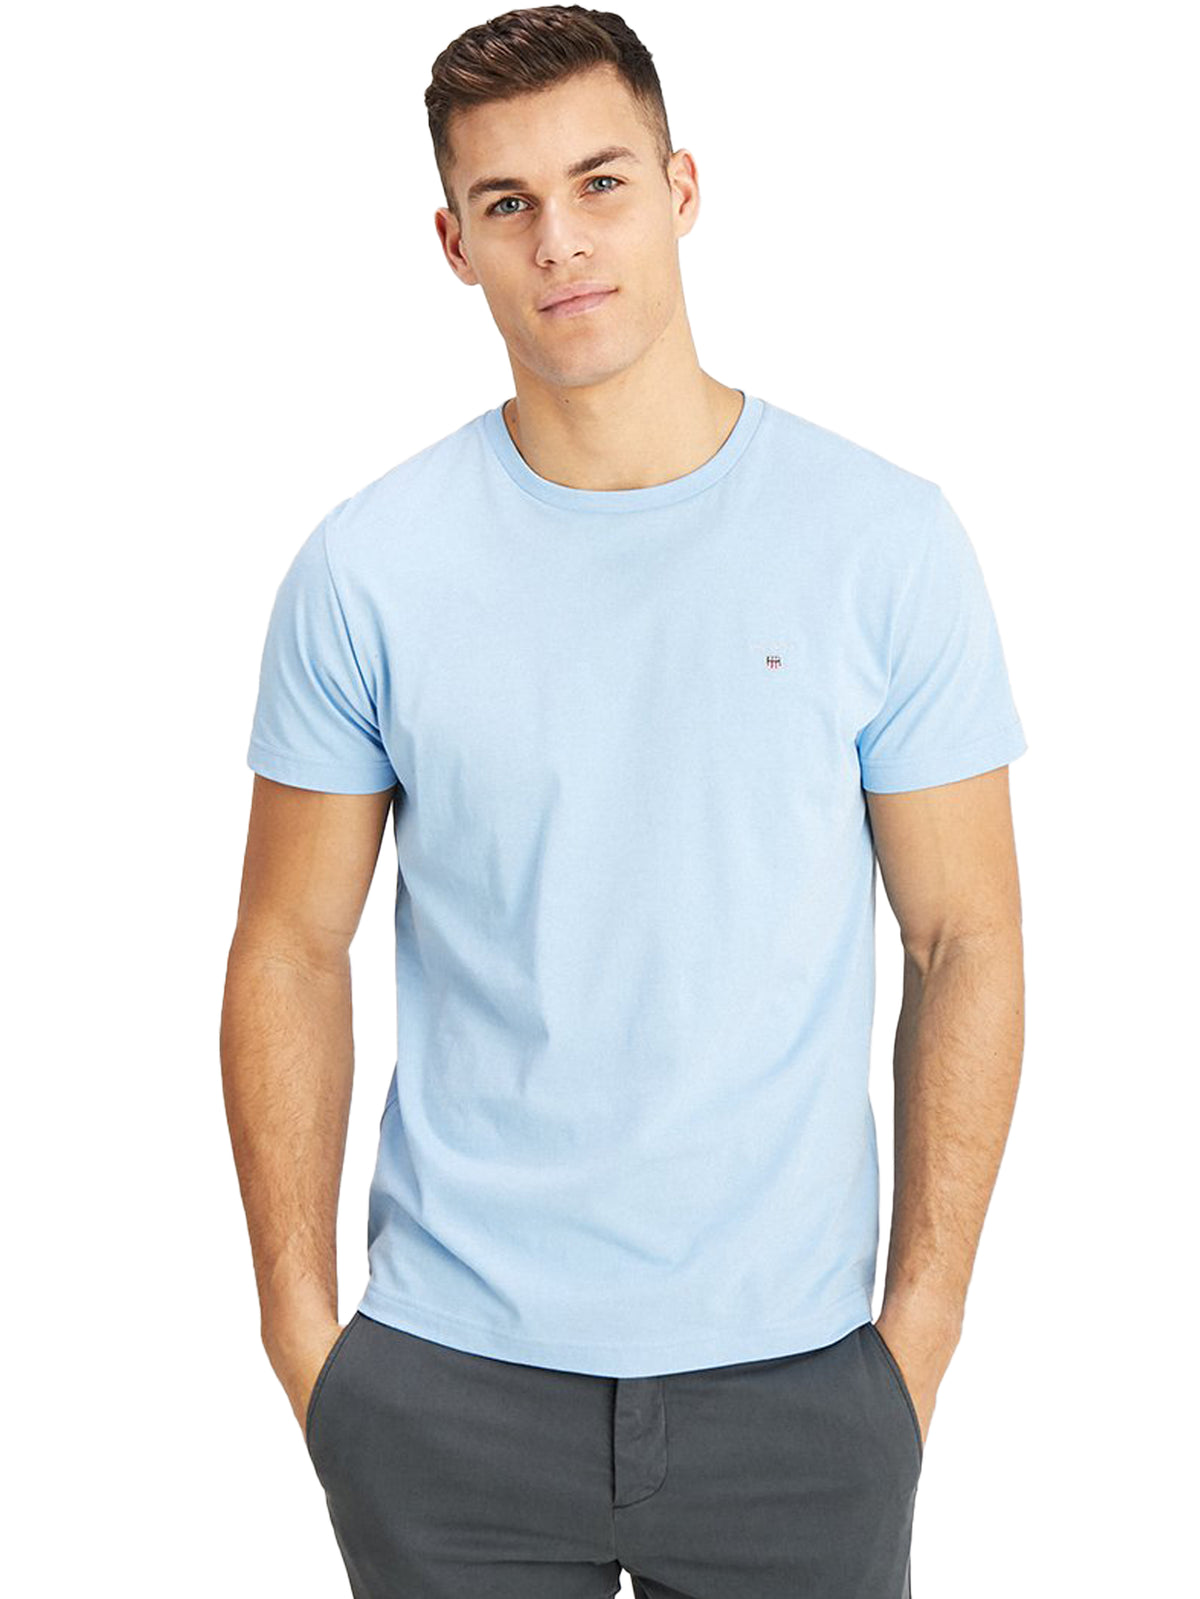 Gant T shirt Original Gant Mens T shirt | Original GANT RAWDENIM